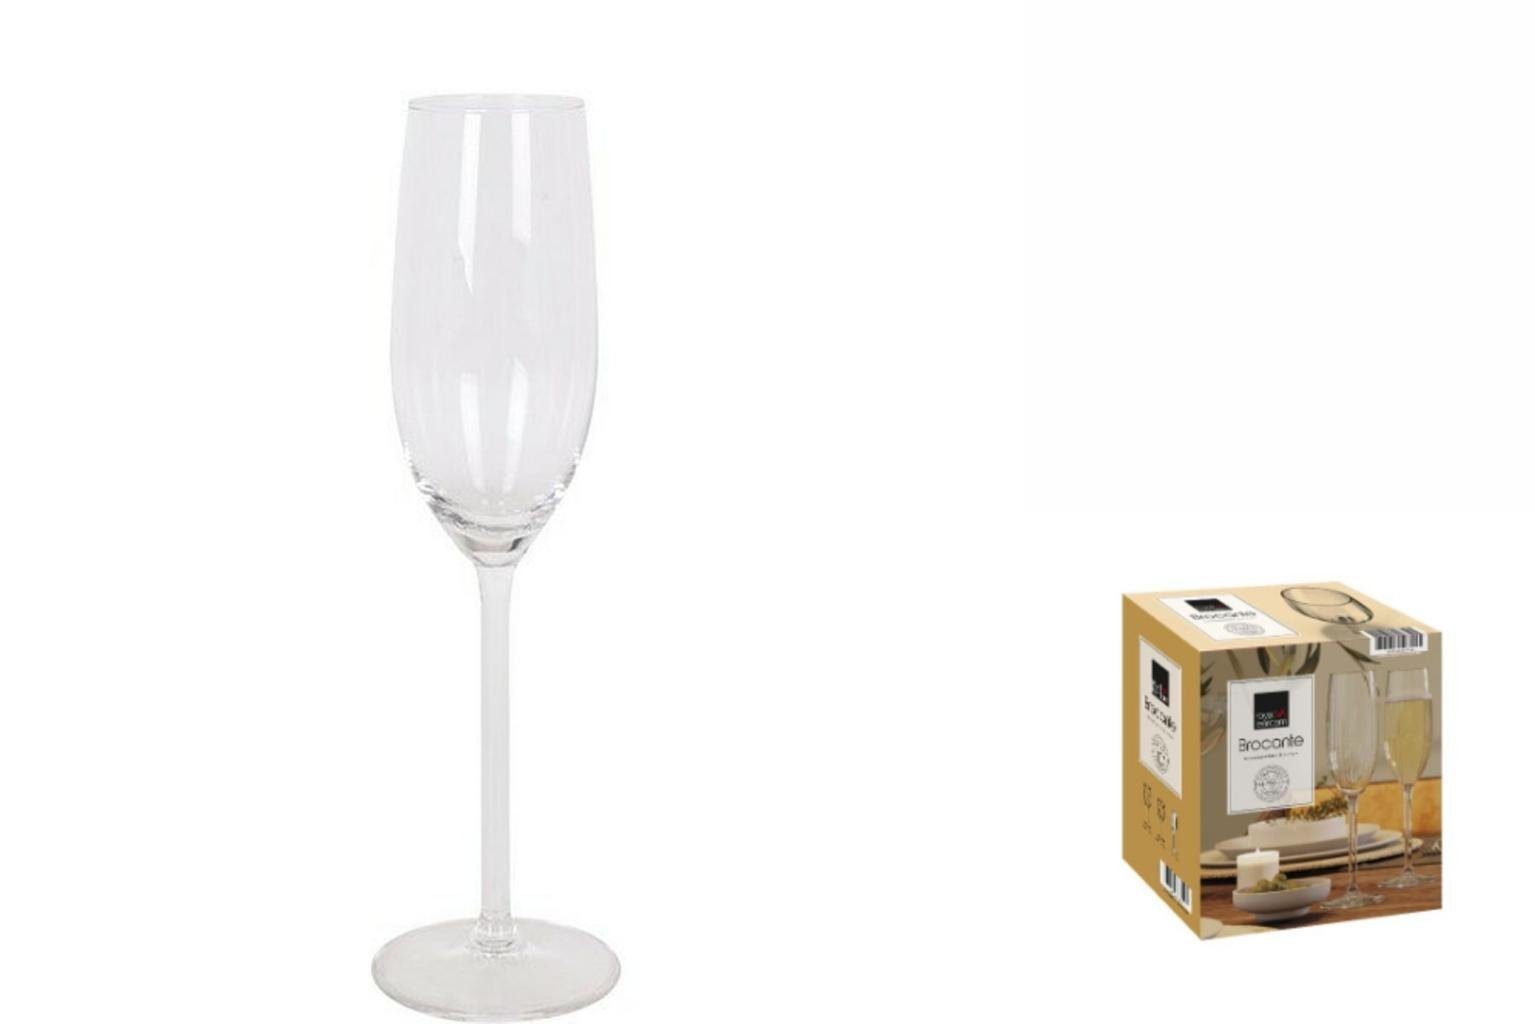 Royal Leerdam Glas Gläsersatz Royal Leerdam Brocante 210 ml champagne 6 Stück